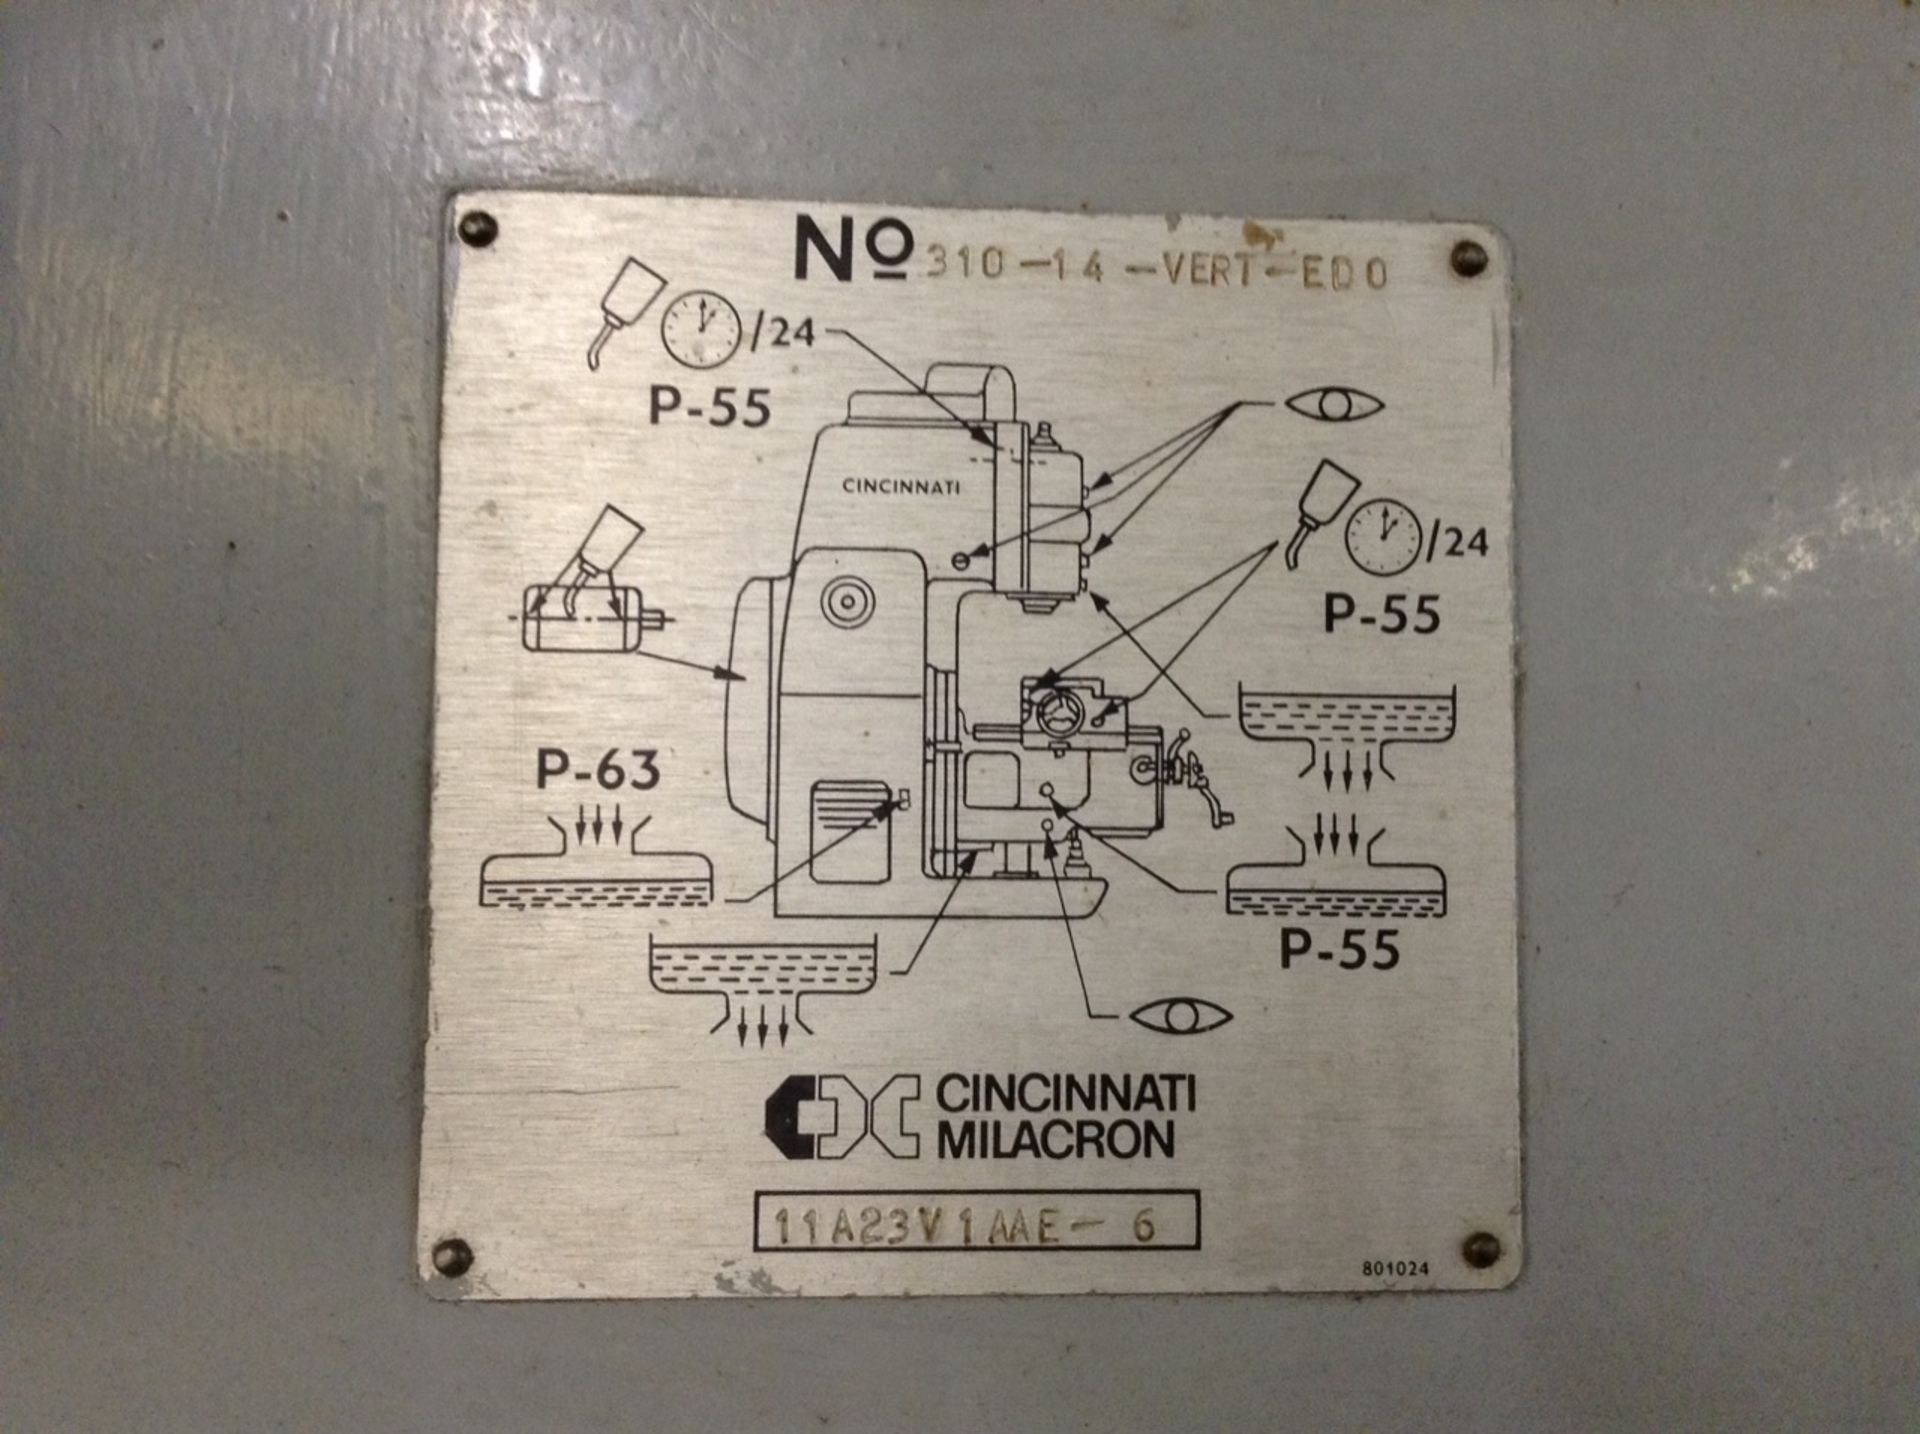 1 Cincinnati Milacron, 310-14-VERT-EDO, Vertical milling machine, table size 65" x 14", , Serial Num - Image 3 of 3